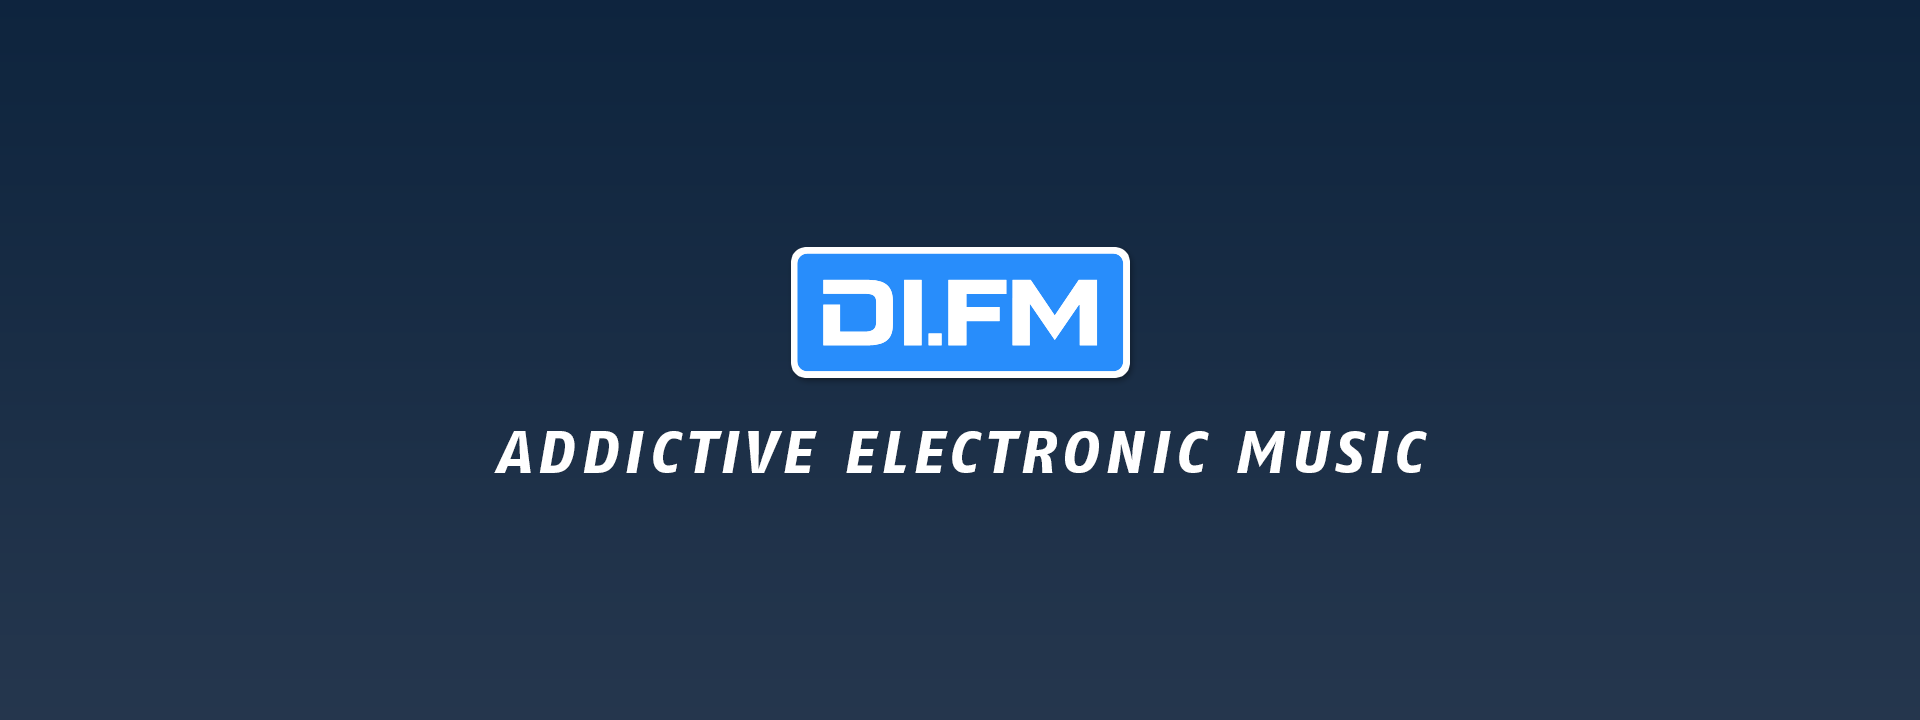 Di.fm Premium Account | The Best Electronic Music